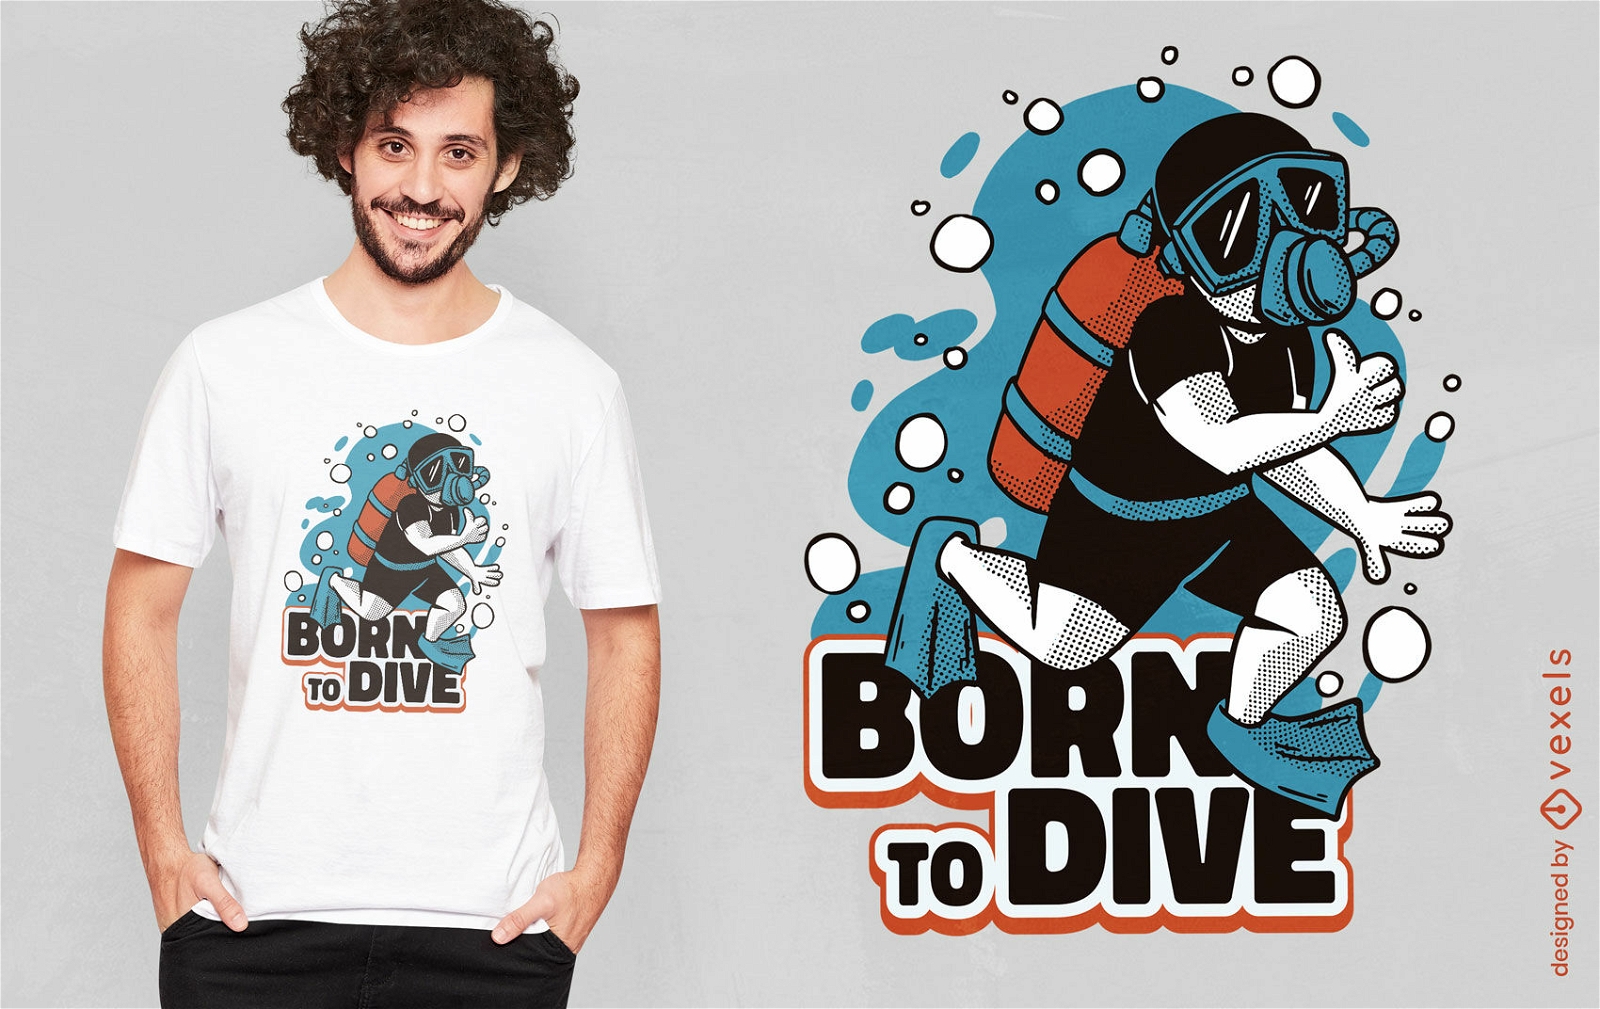 Born to dive t-shirt design